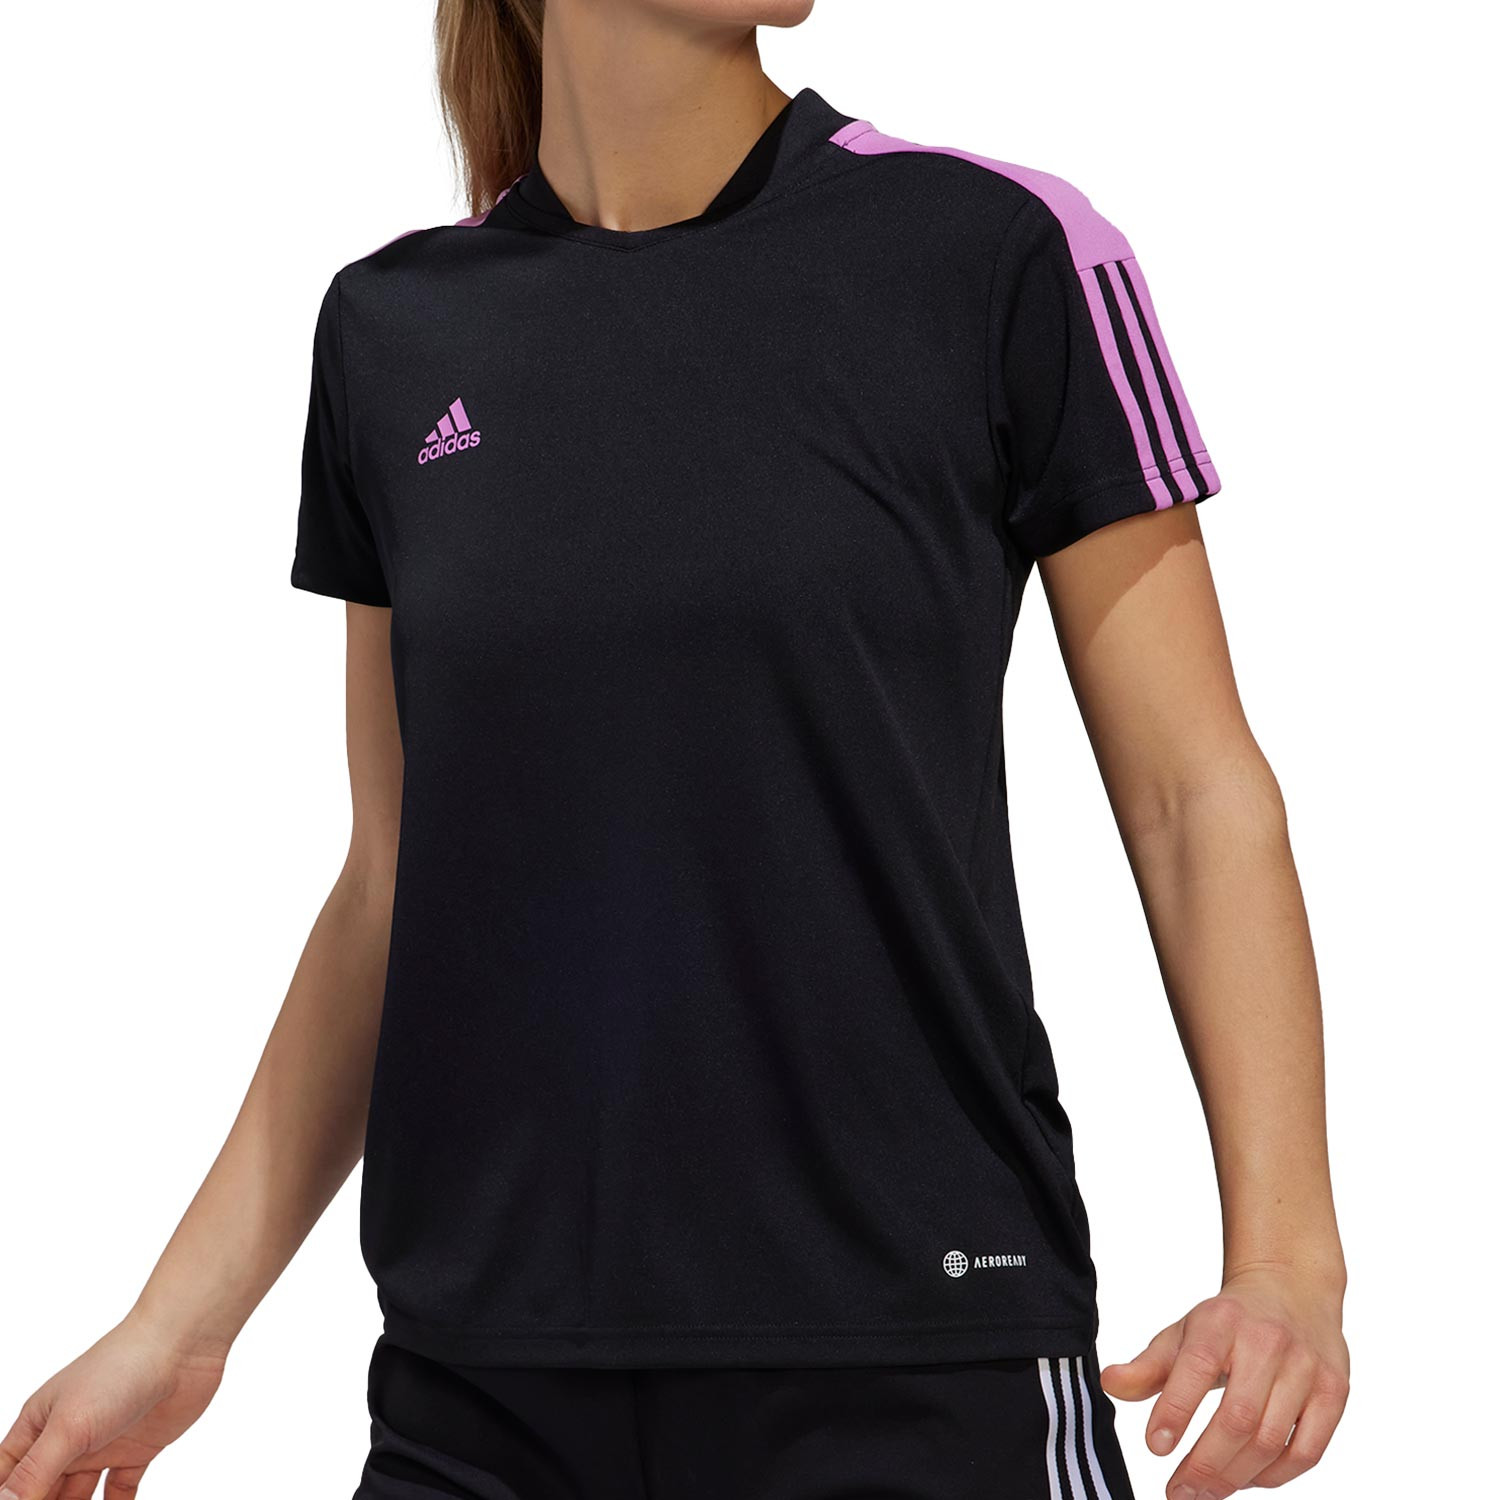 Suposiciones, suposiciones. Adivinar Testificar Andrew Halliday Camiseta adidas Tiro mujer Essentials negro rosa | futbolmania